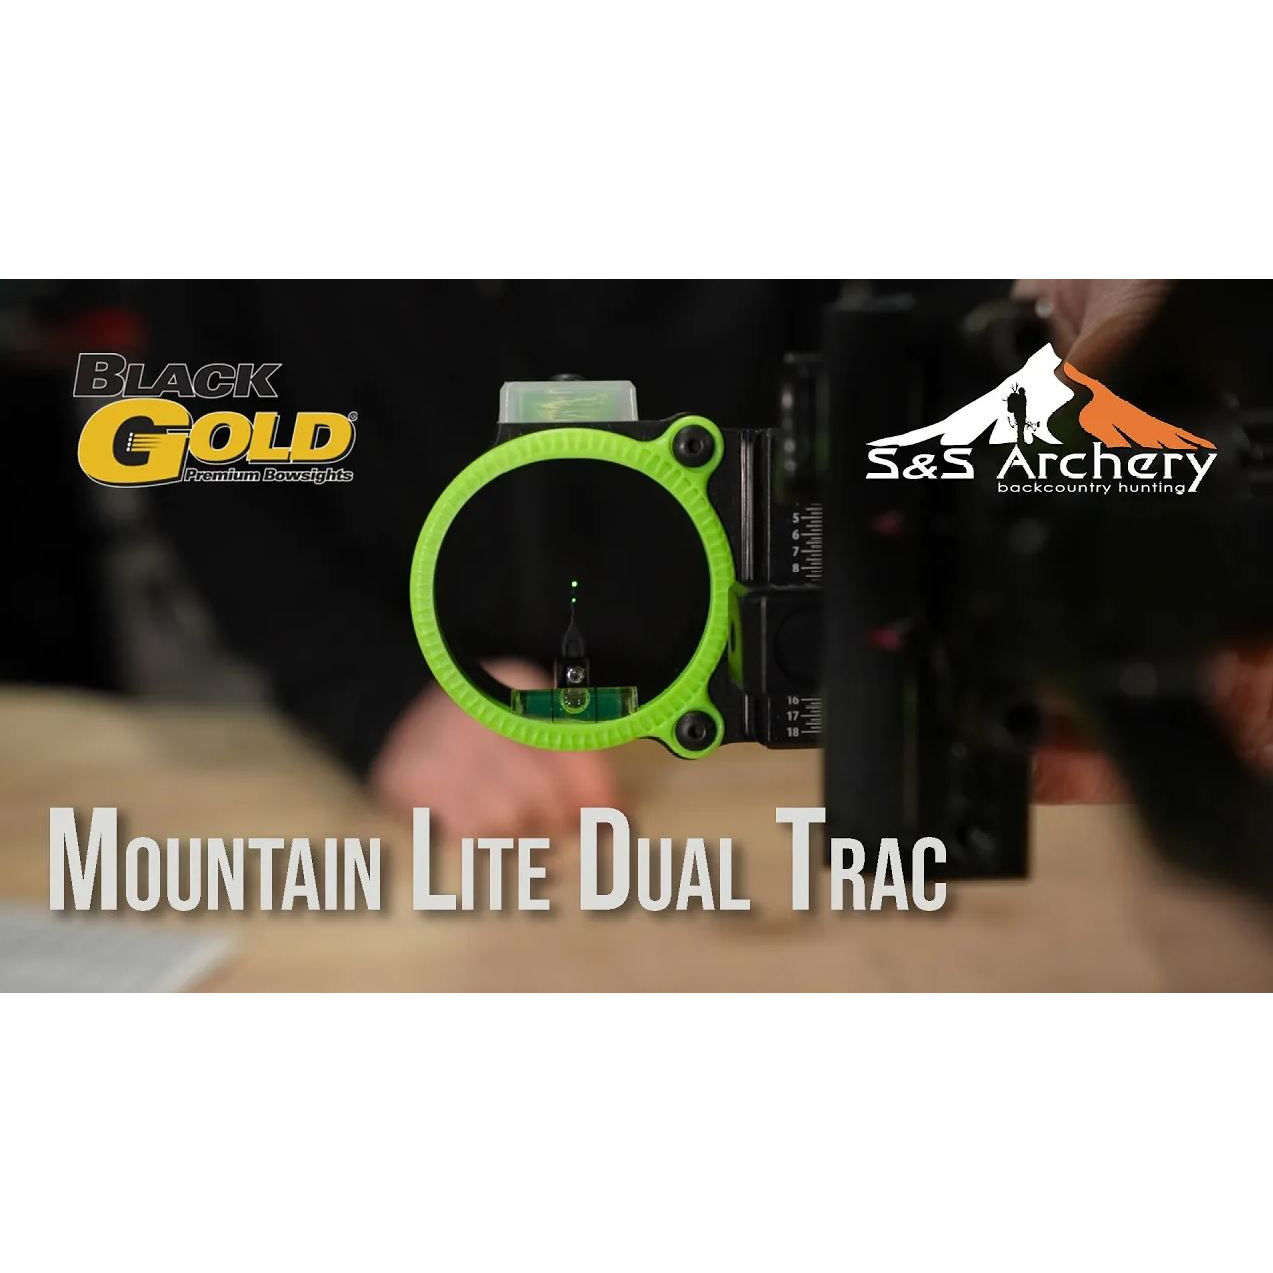 Black Gold Mountain Lite Dual Trac